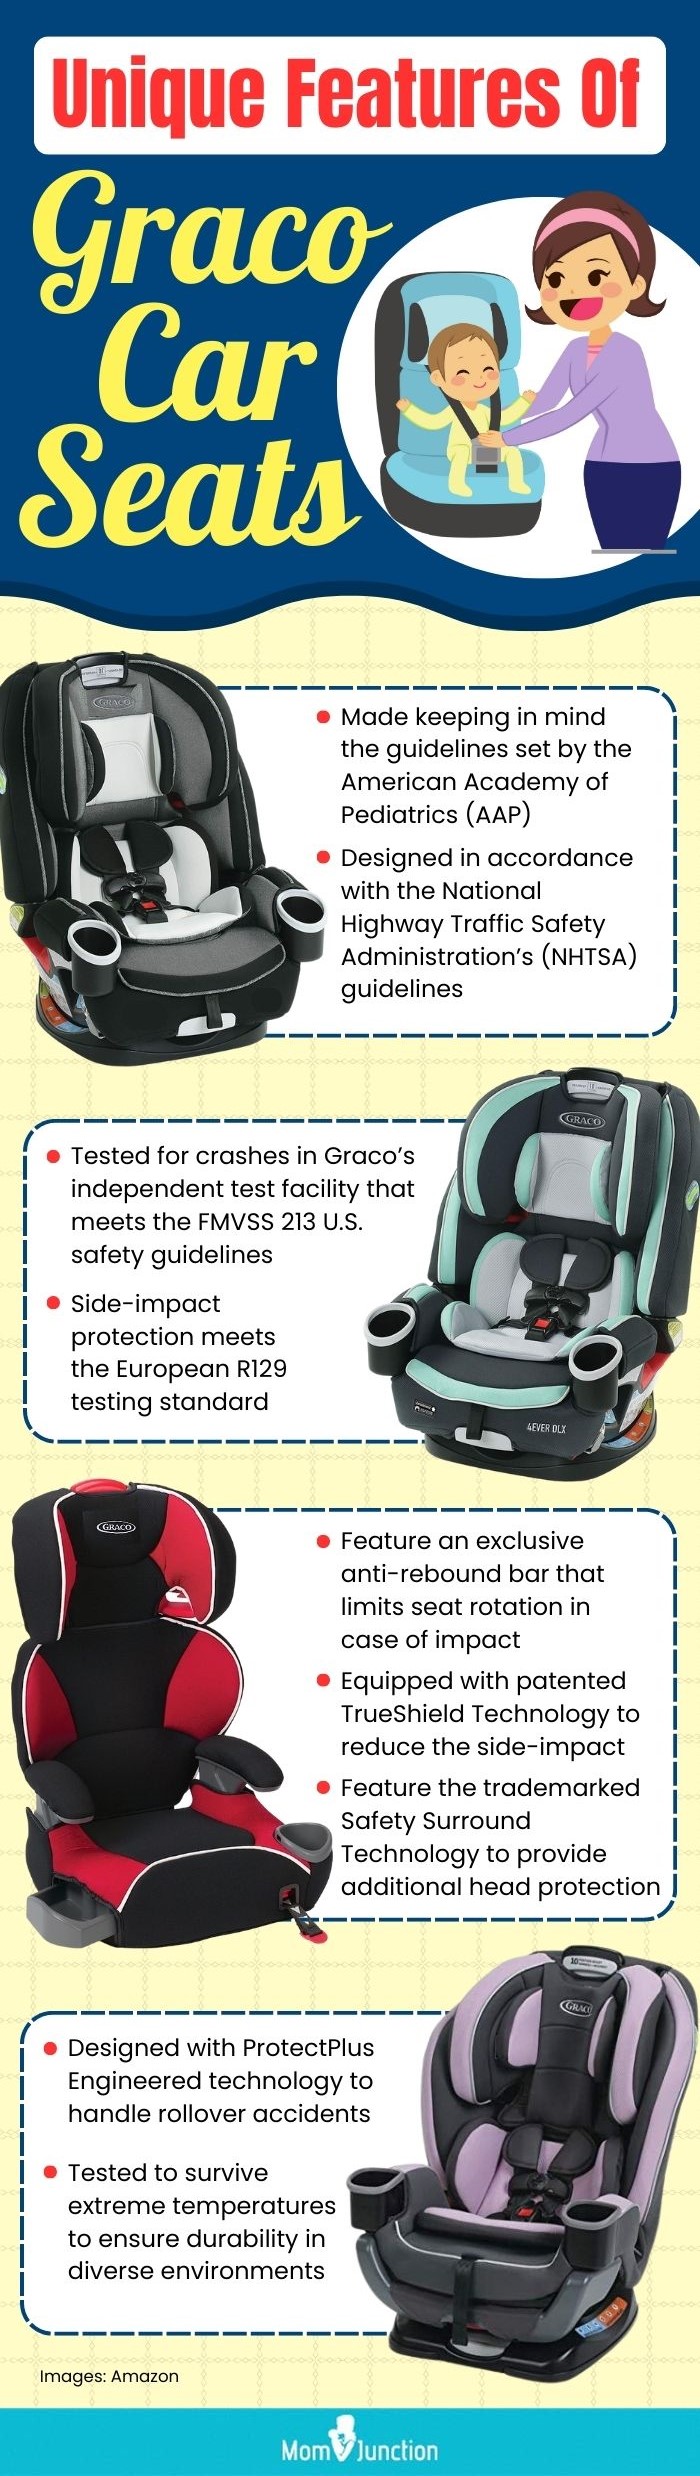 Unique Features Of Graco Car Seats (infographic)